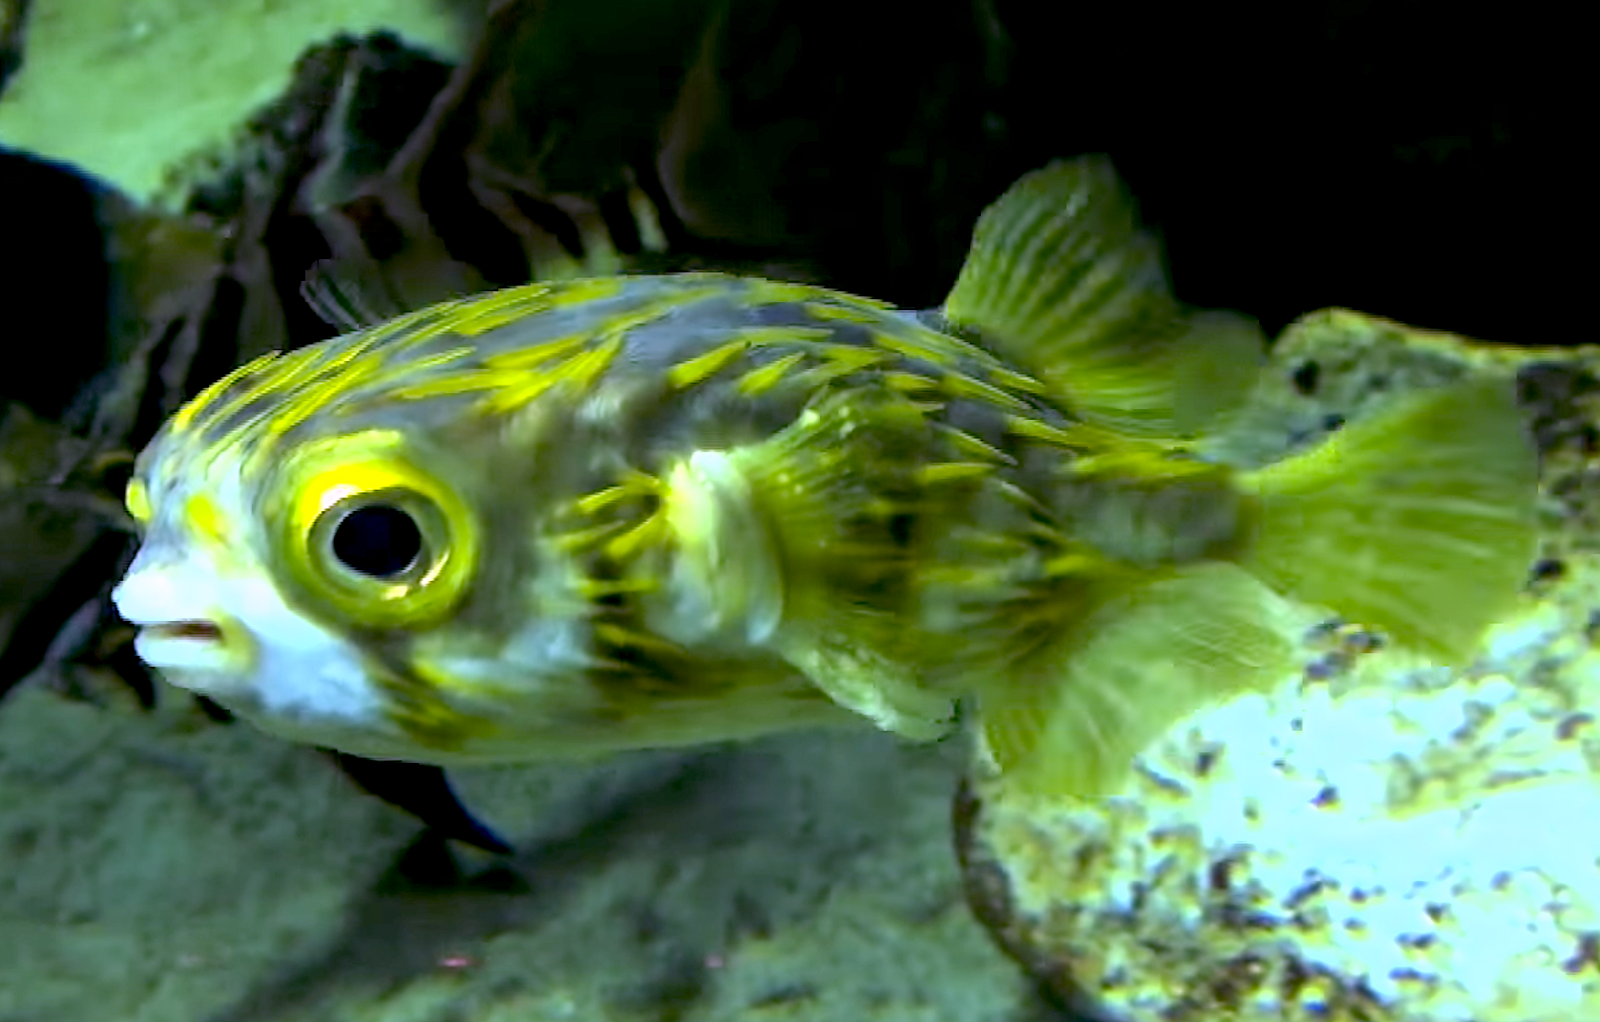 Aquarium Movies Japan Archive 生きている魚図鑑 サザングローブフィッシュ Porcupine Fish Southern Globefish Slender Spined Porcupine Fish Diodon Nichthemerus